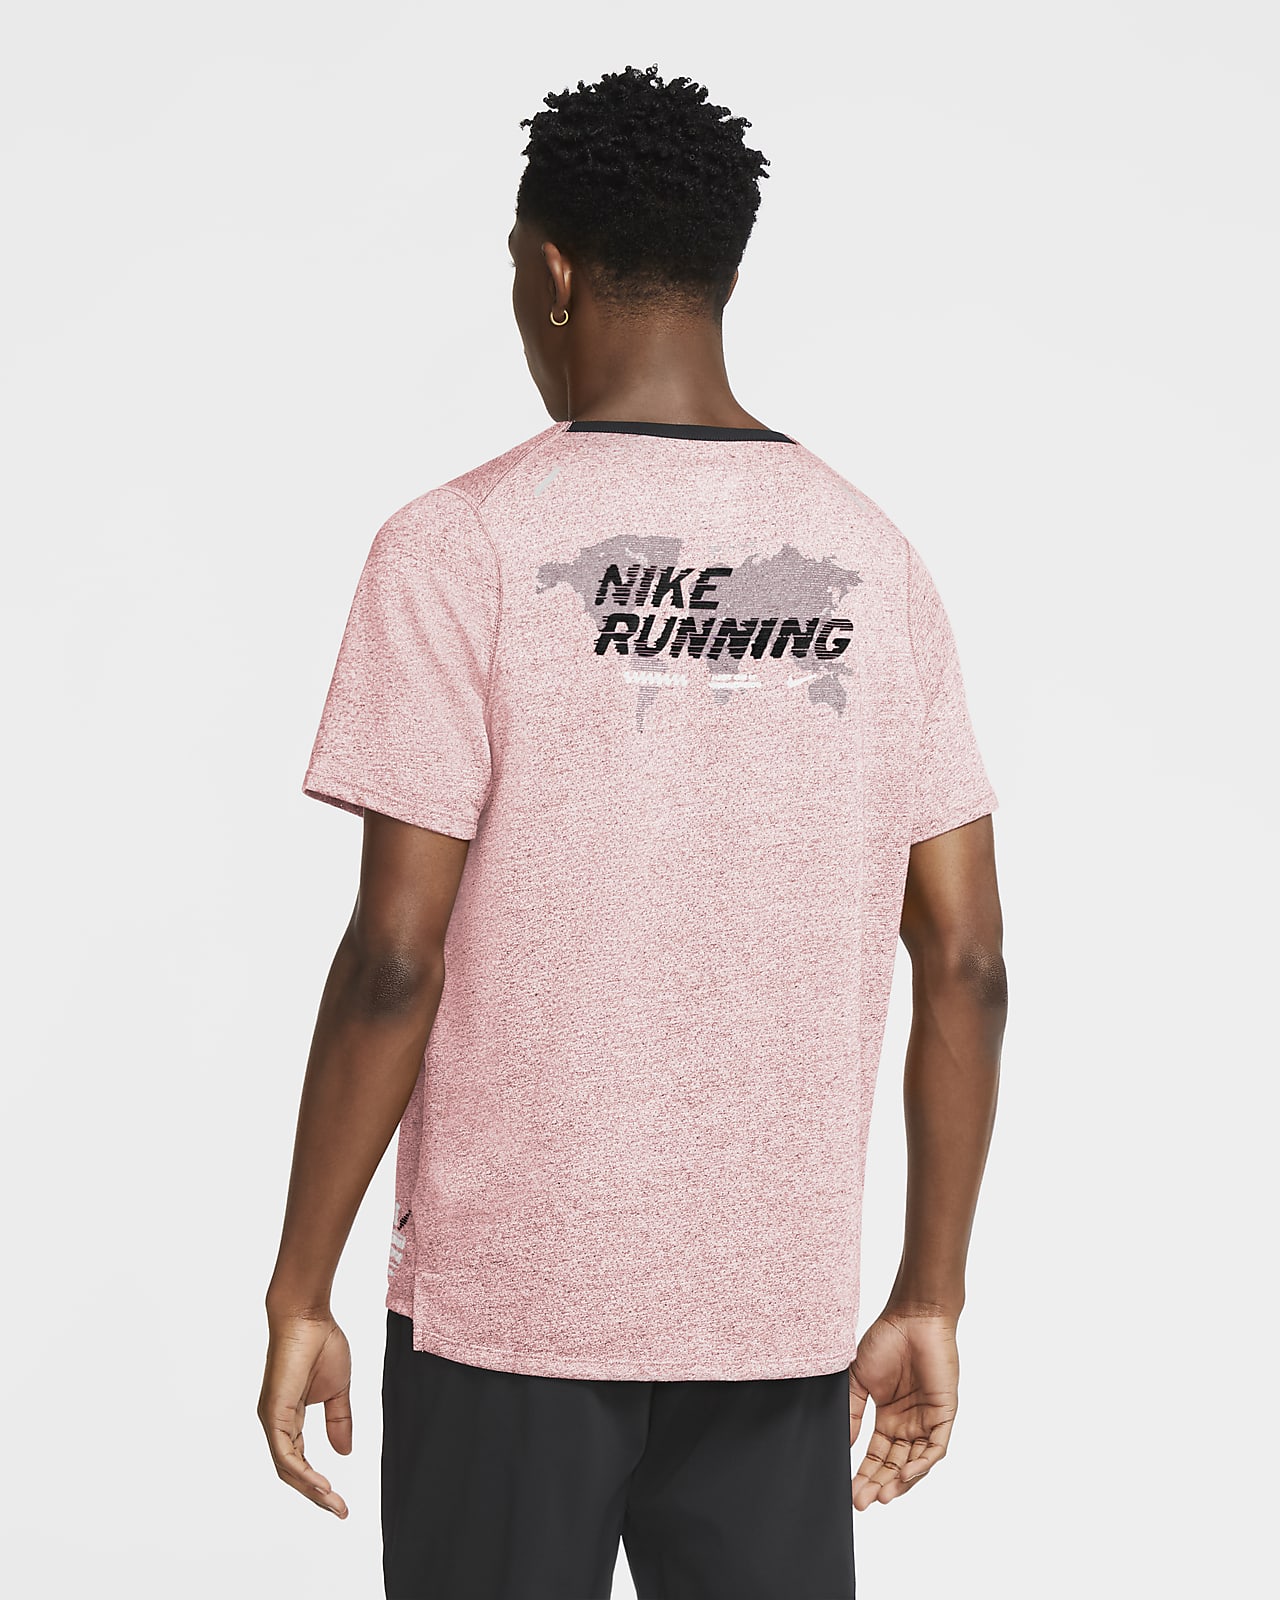 mens pink nike running top